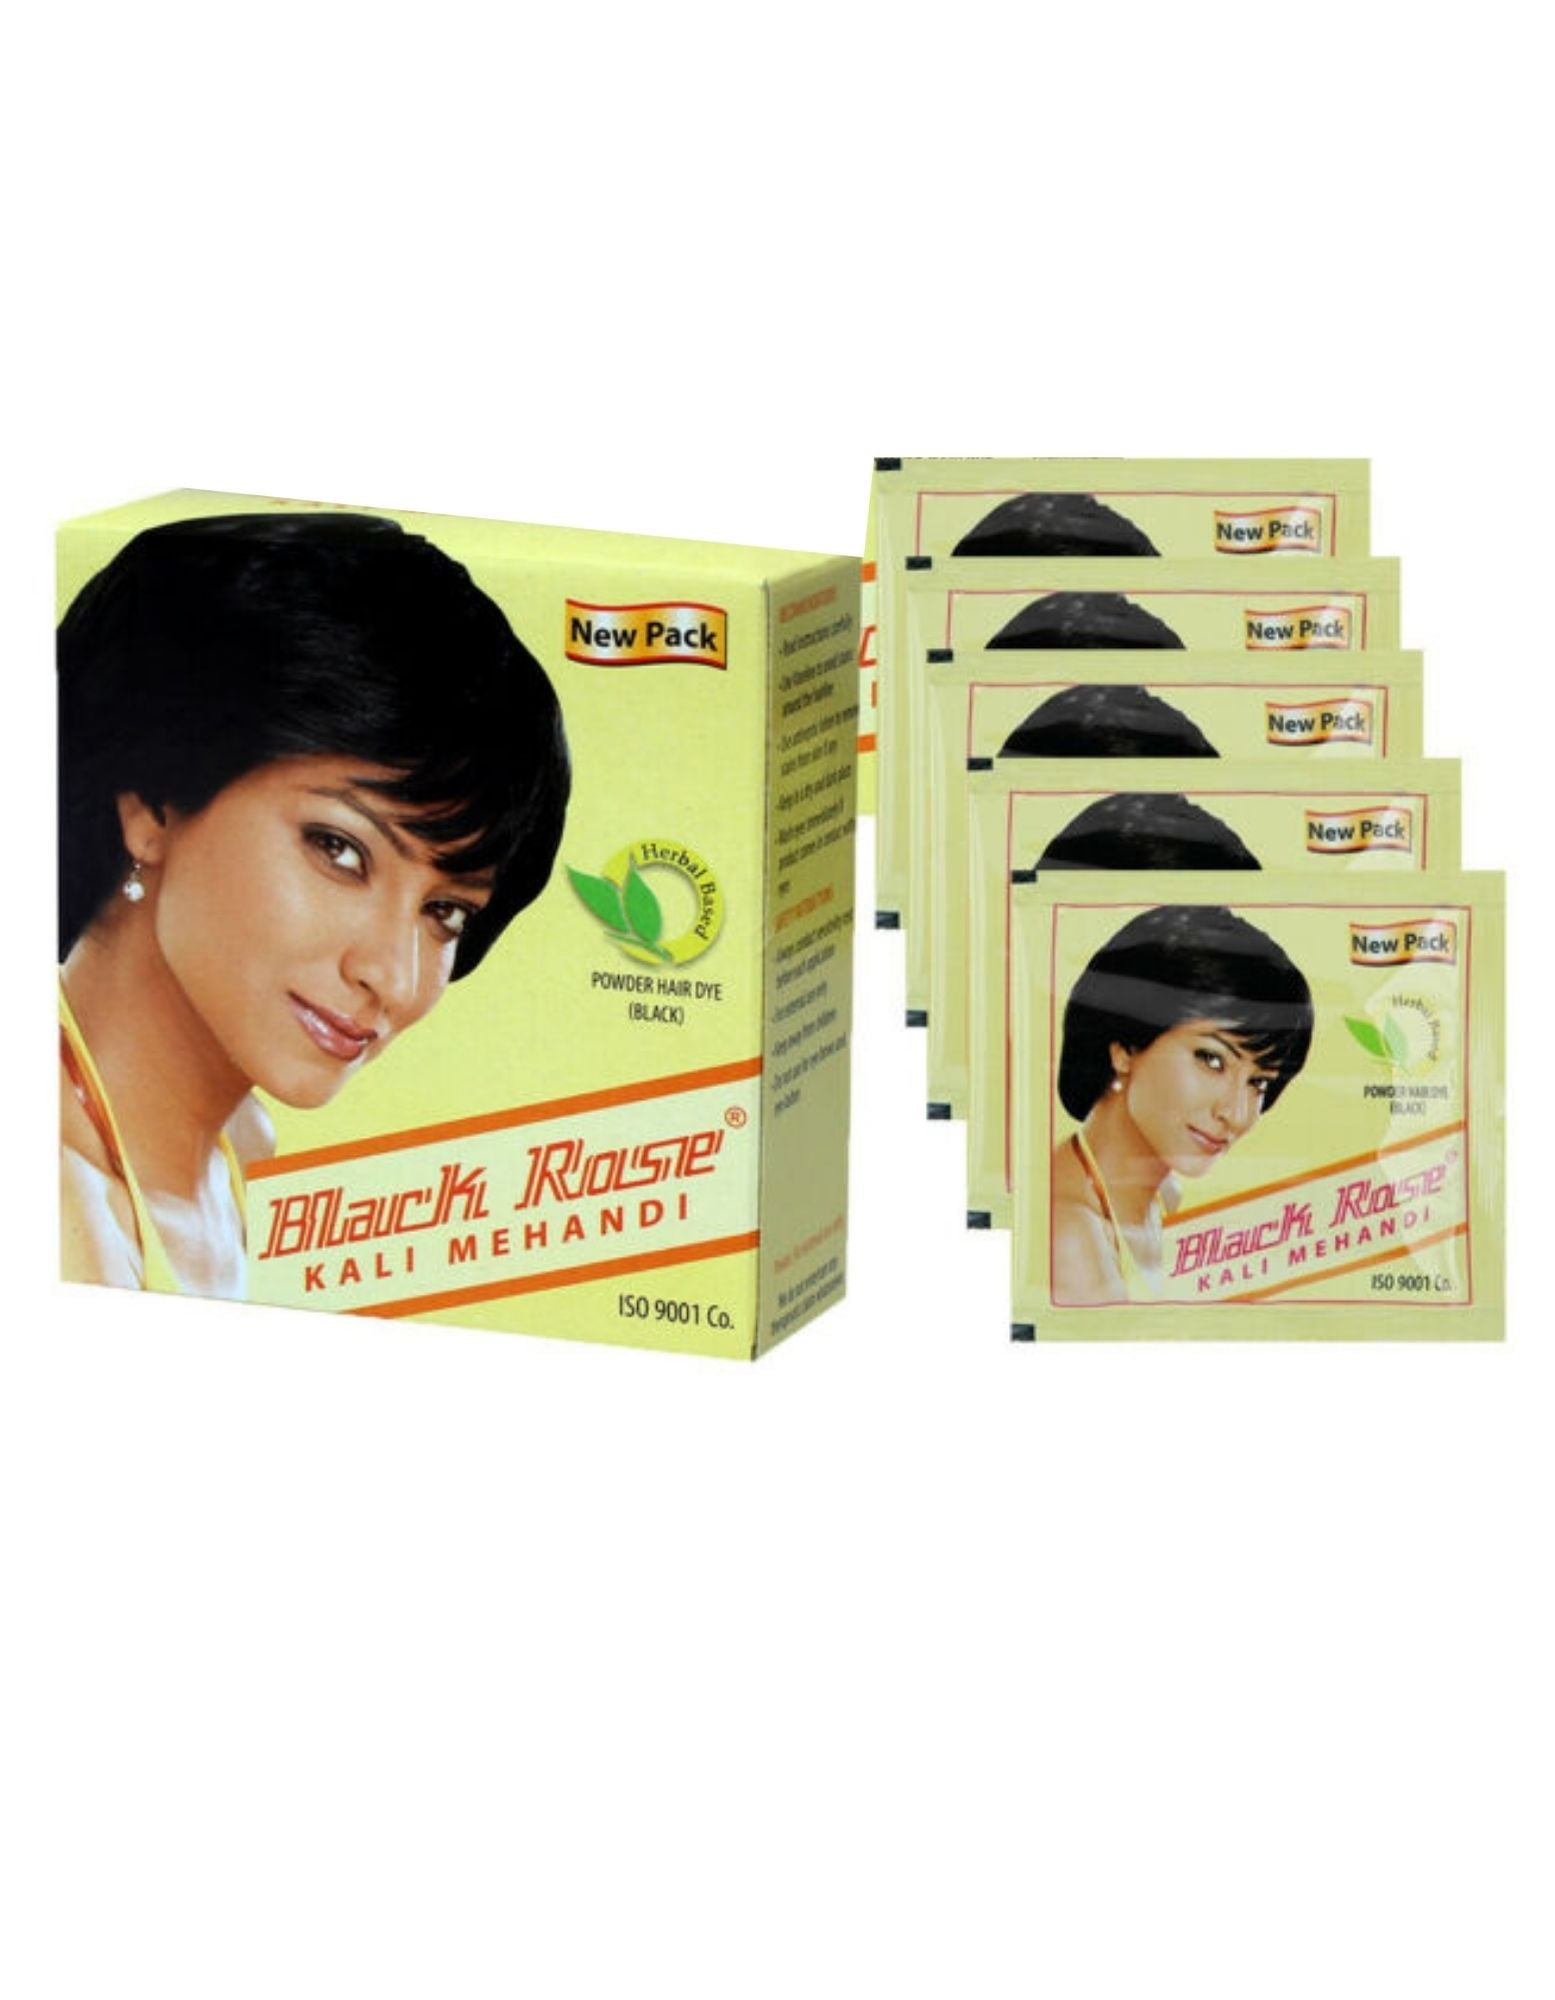 Black Rose Kali Mehandi Black Hair Dye Powder Price, Uses, Side Effects,  Composition - Apollo Pharmacy